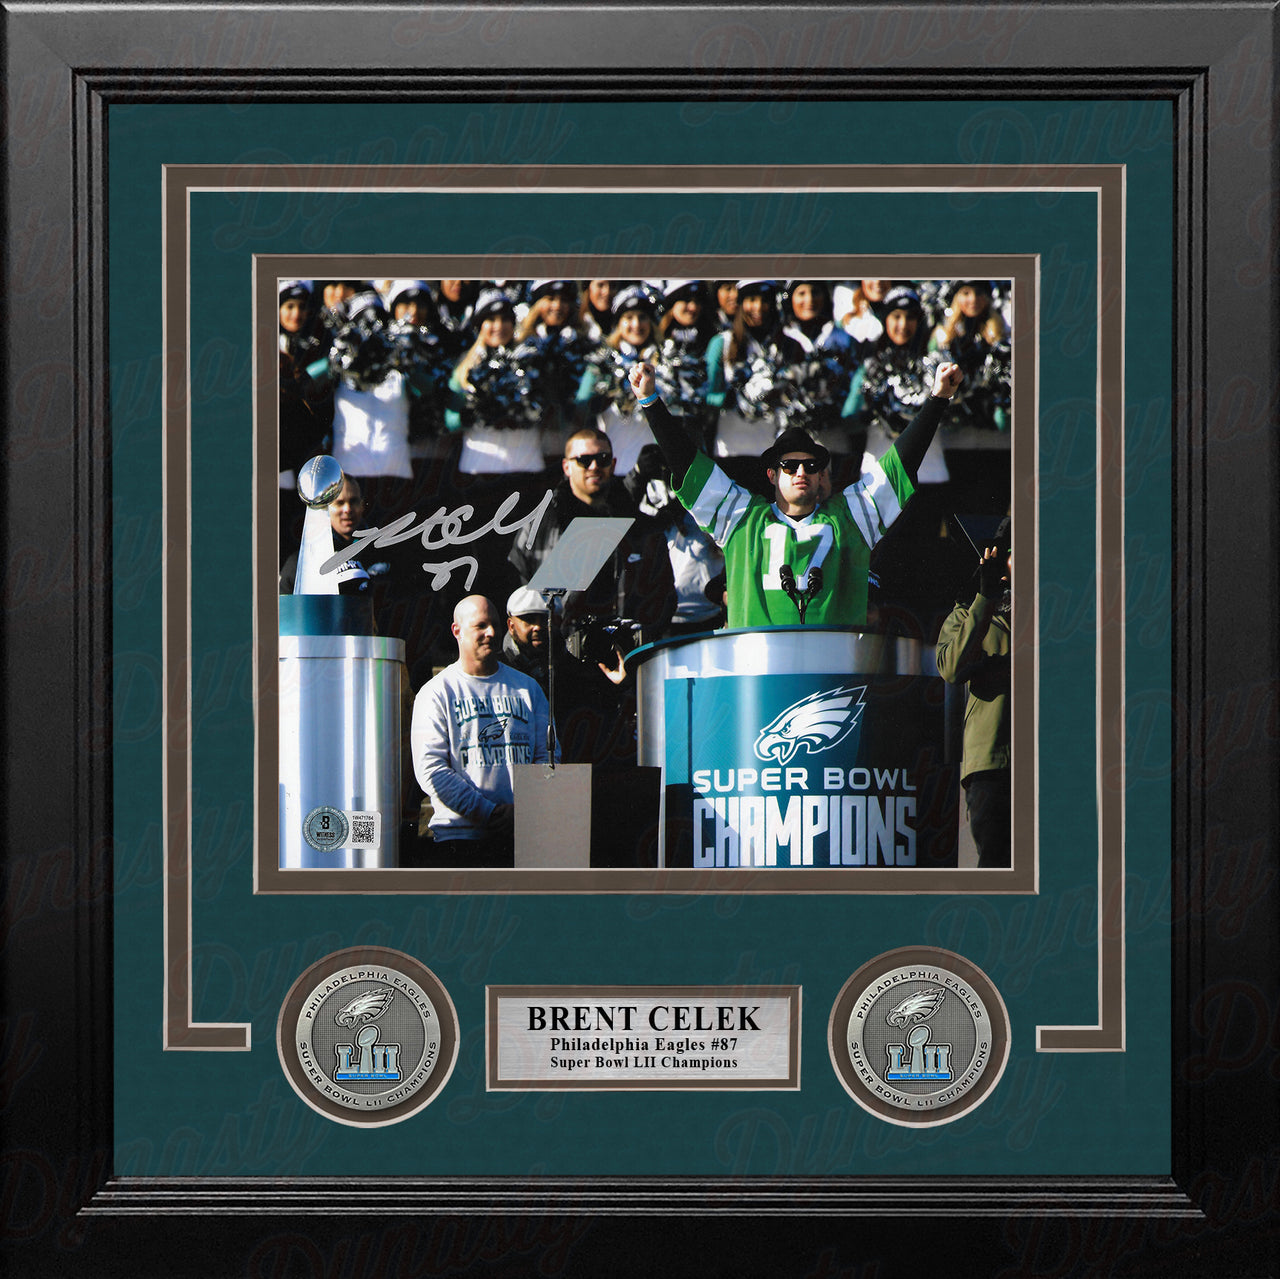 Brent Celek Super Bowl Champions Victory Speech Philadelphia Eagles Autographed 8x10 Framed Photo